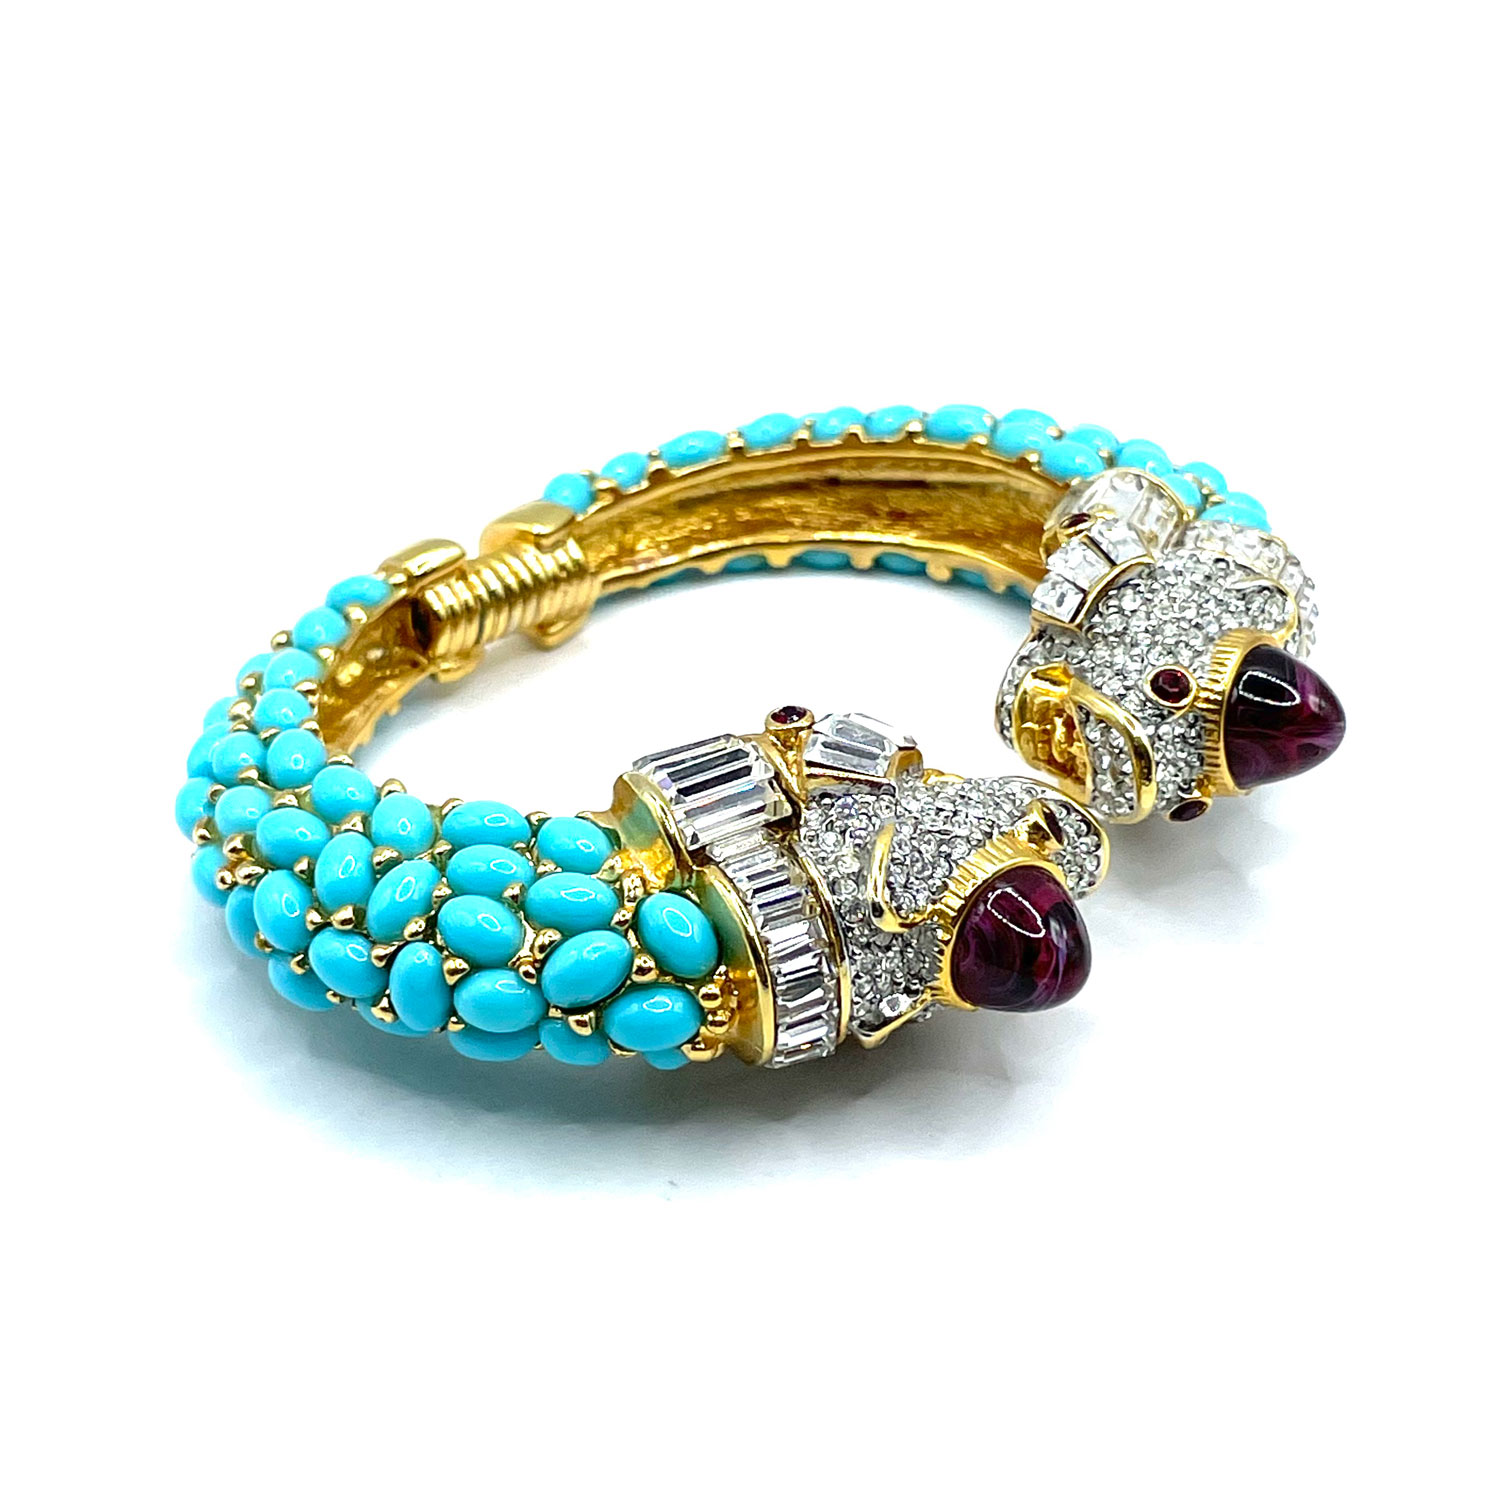 Kenneth J Lane jeweled bracelet